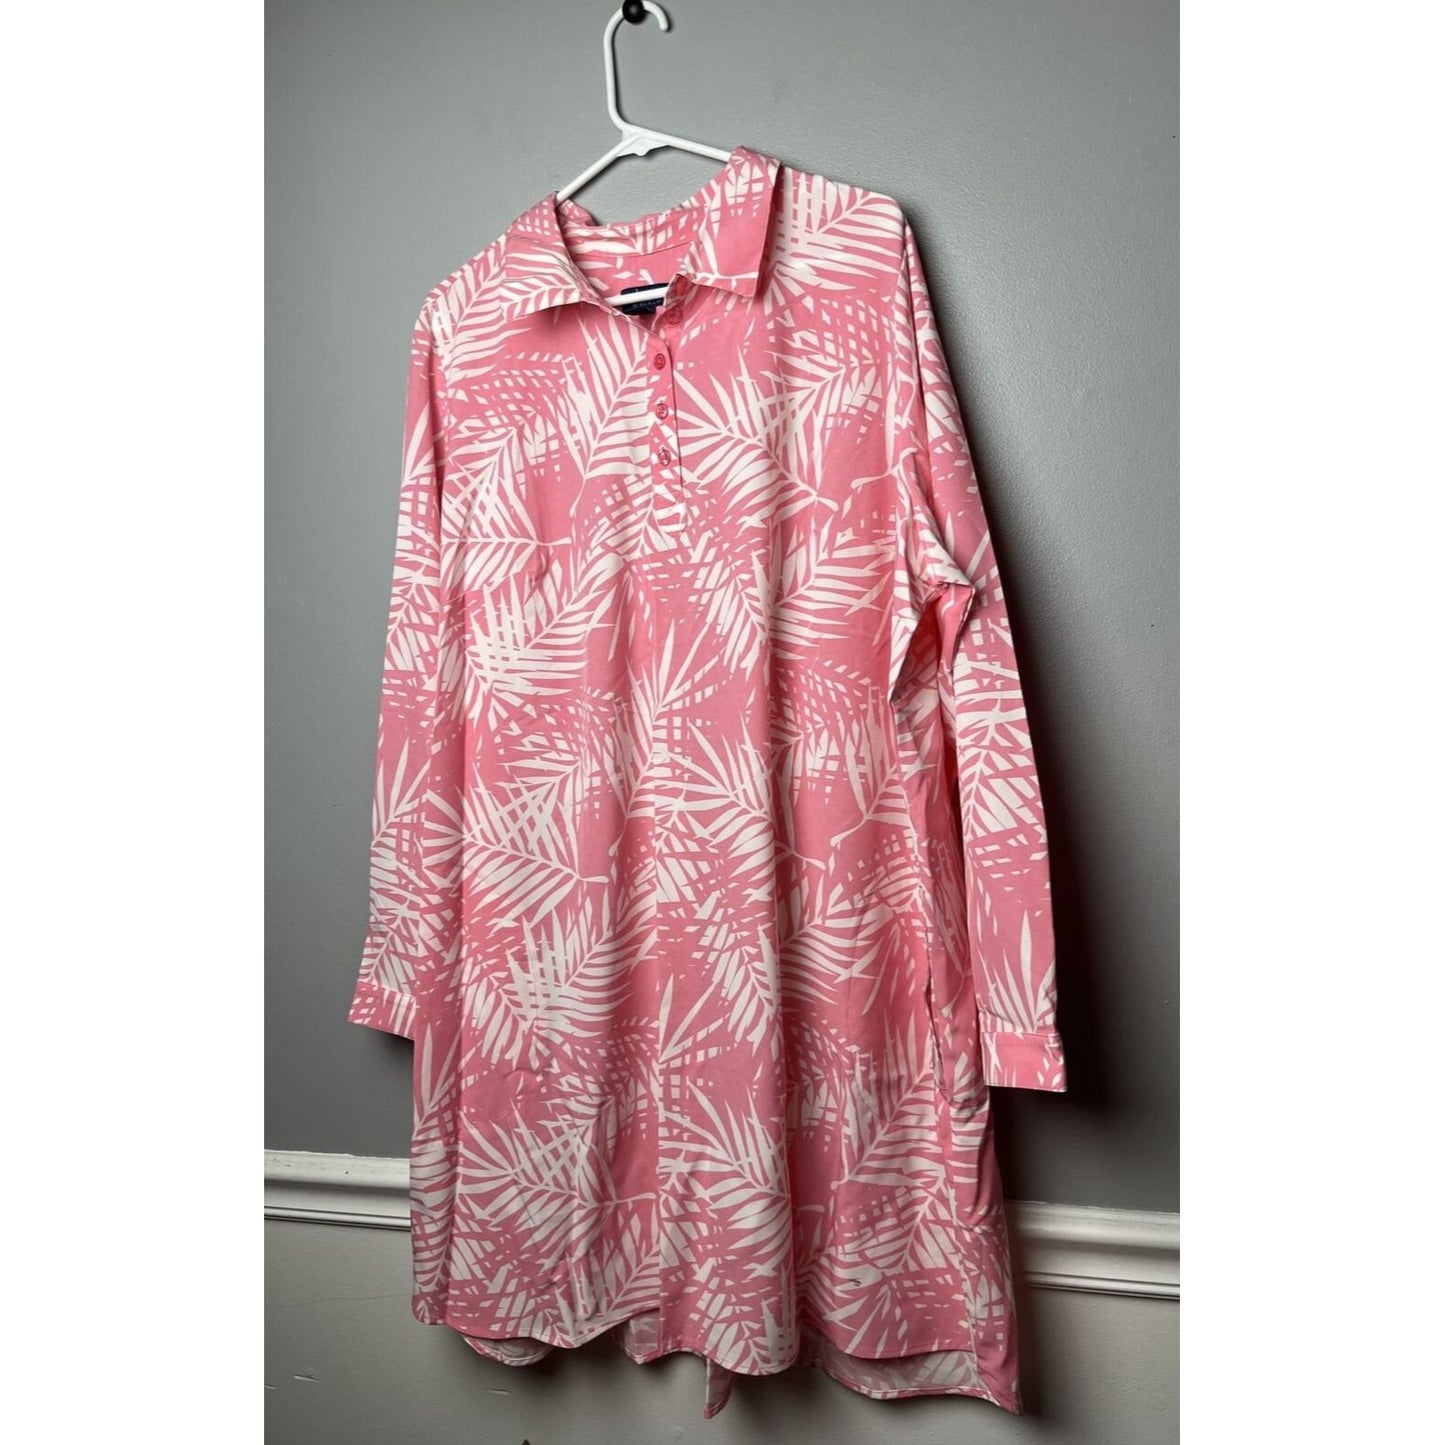 Denim & Co. Beach Quick Dry Shirt Dress Cover-Up Size 2X Pink